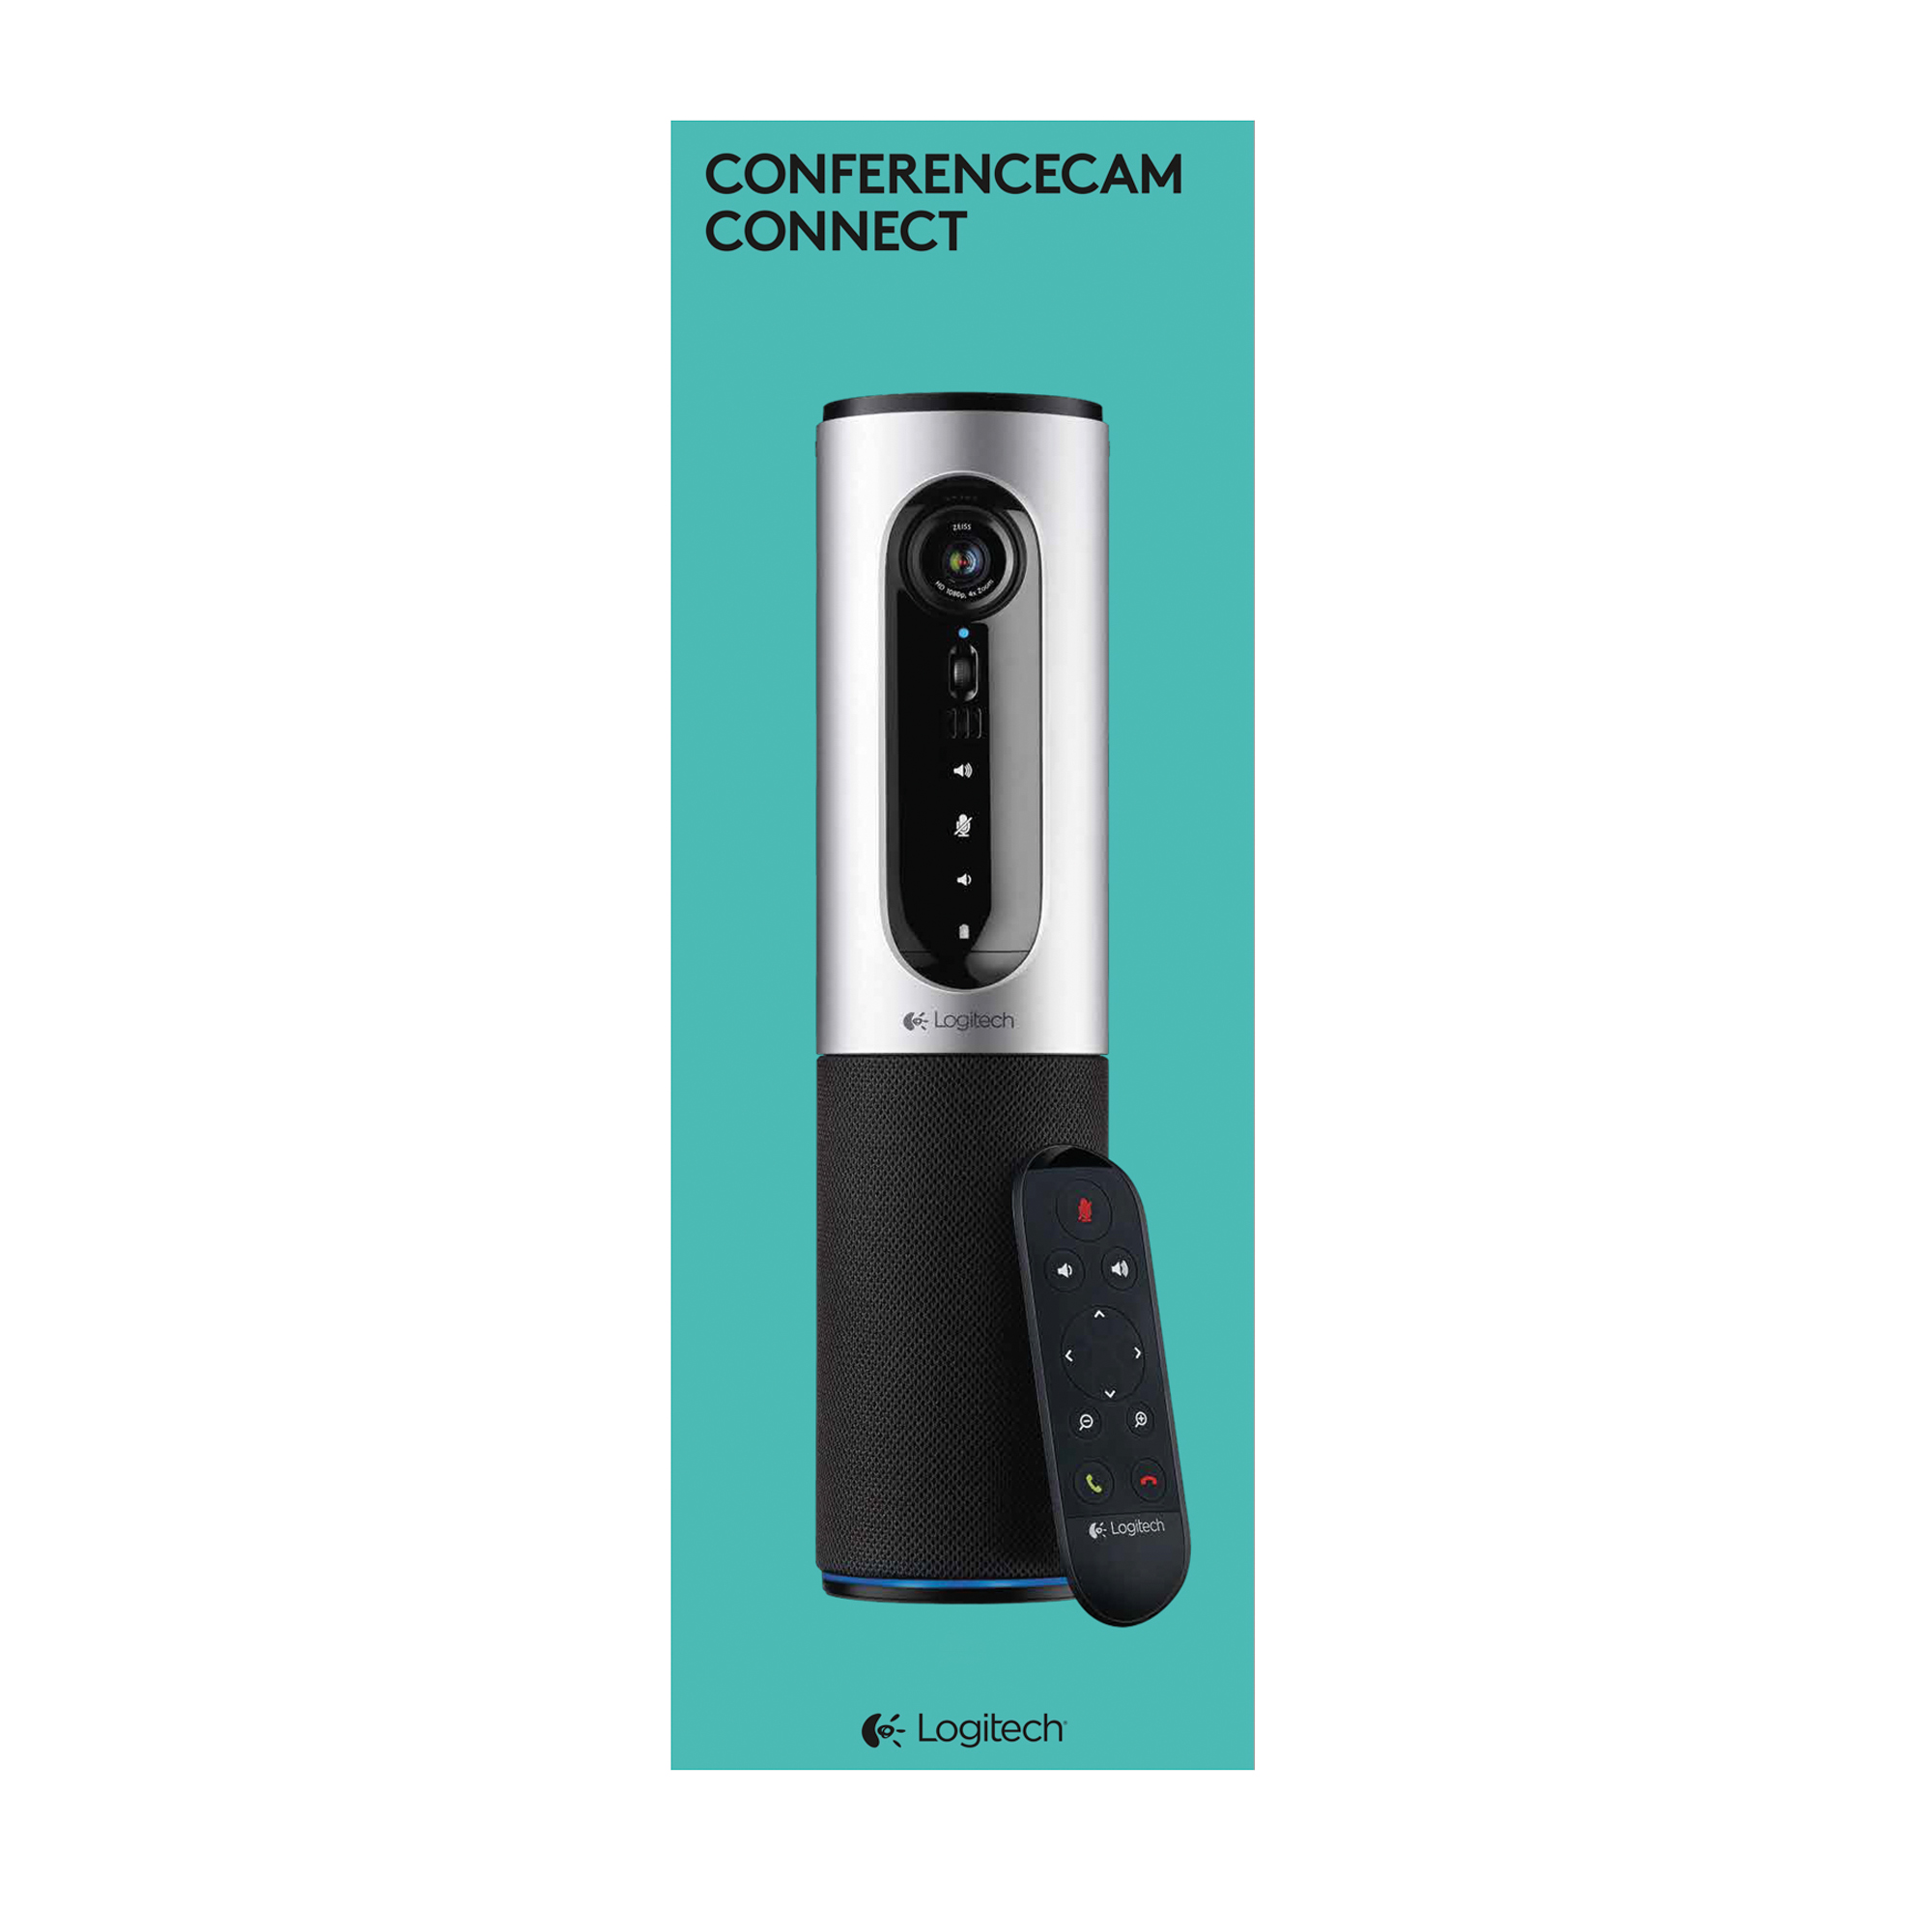 Logitech Konferenzkamera Connect